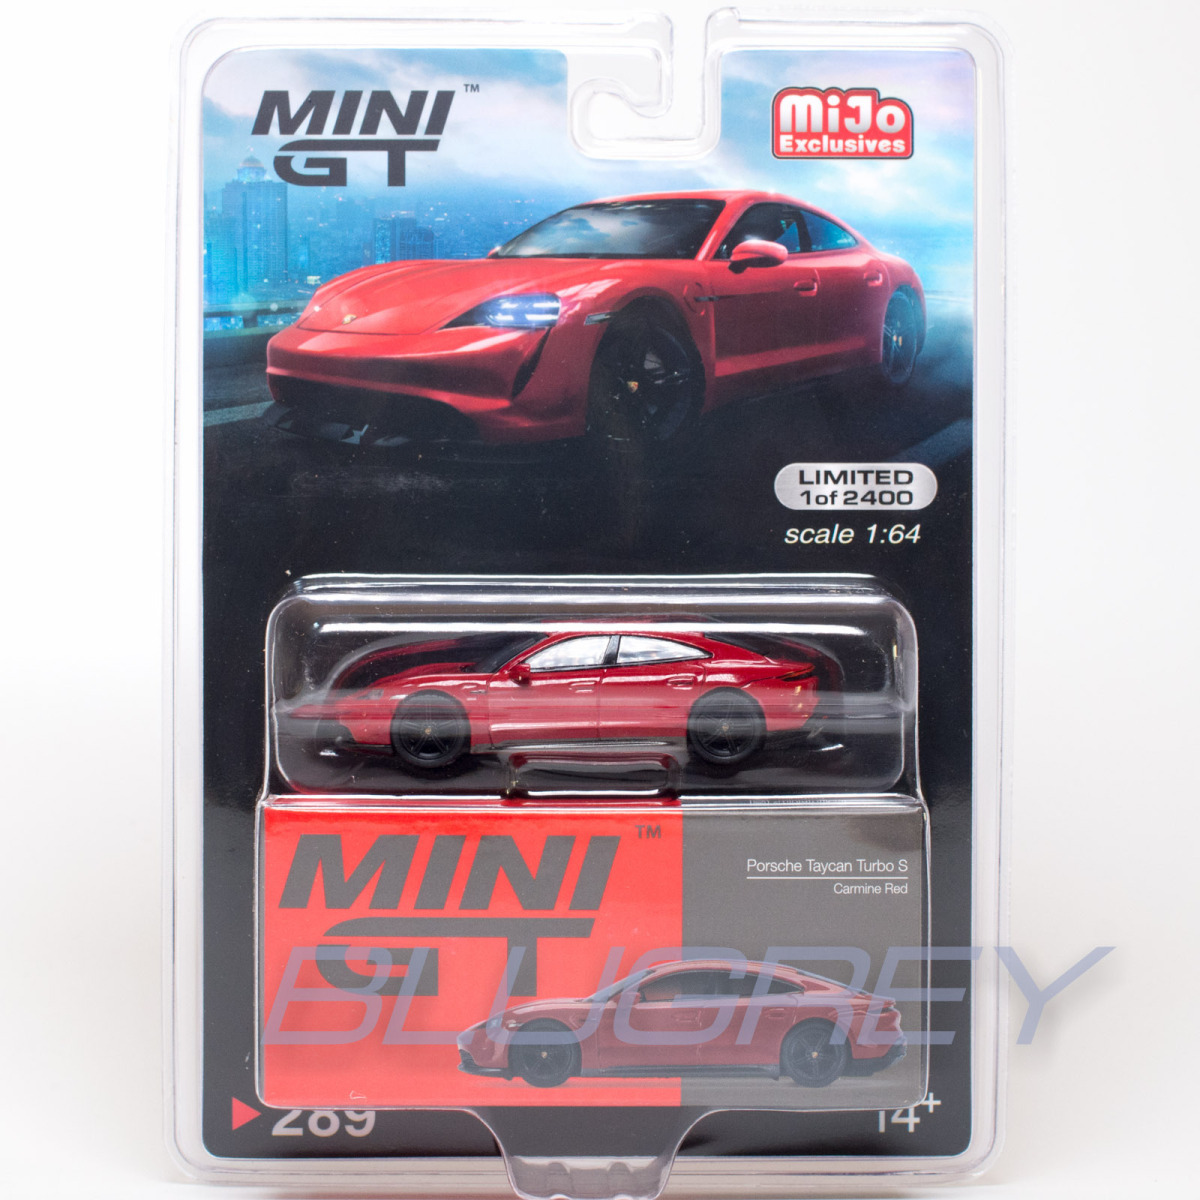 MINI GT MGT00289 PORSCHE TAYCAN TURBO S 1/64 DIECAST MODEL CAR CARMINE RED